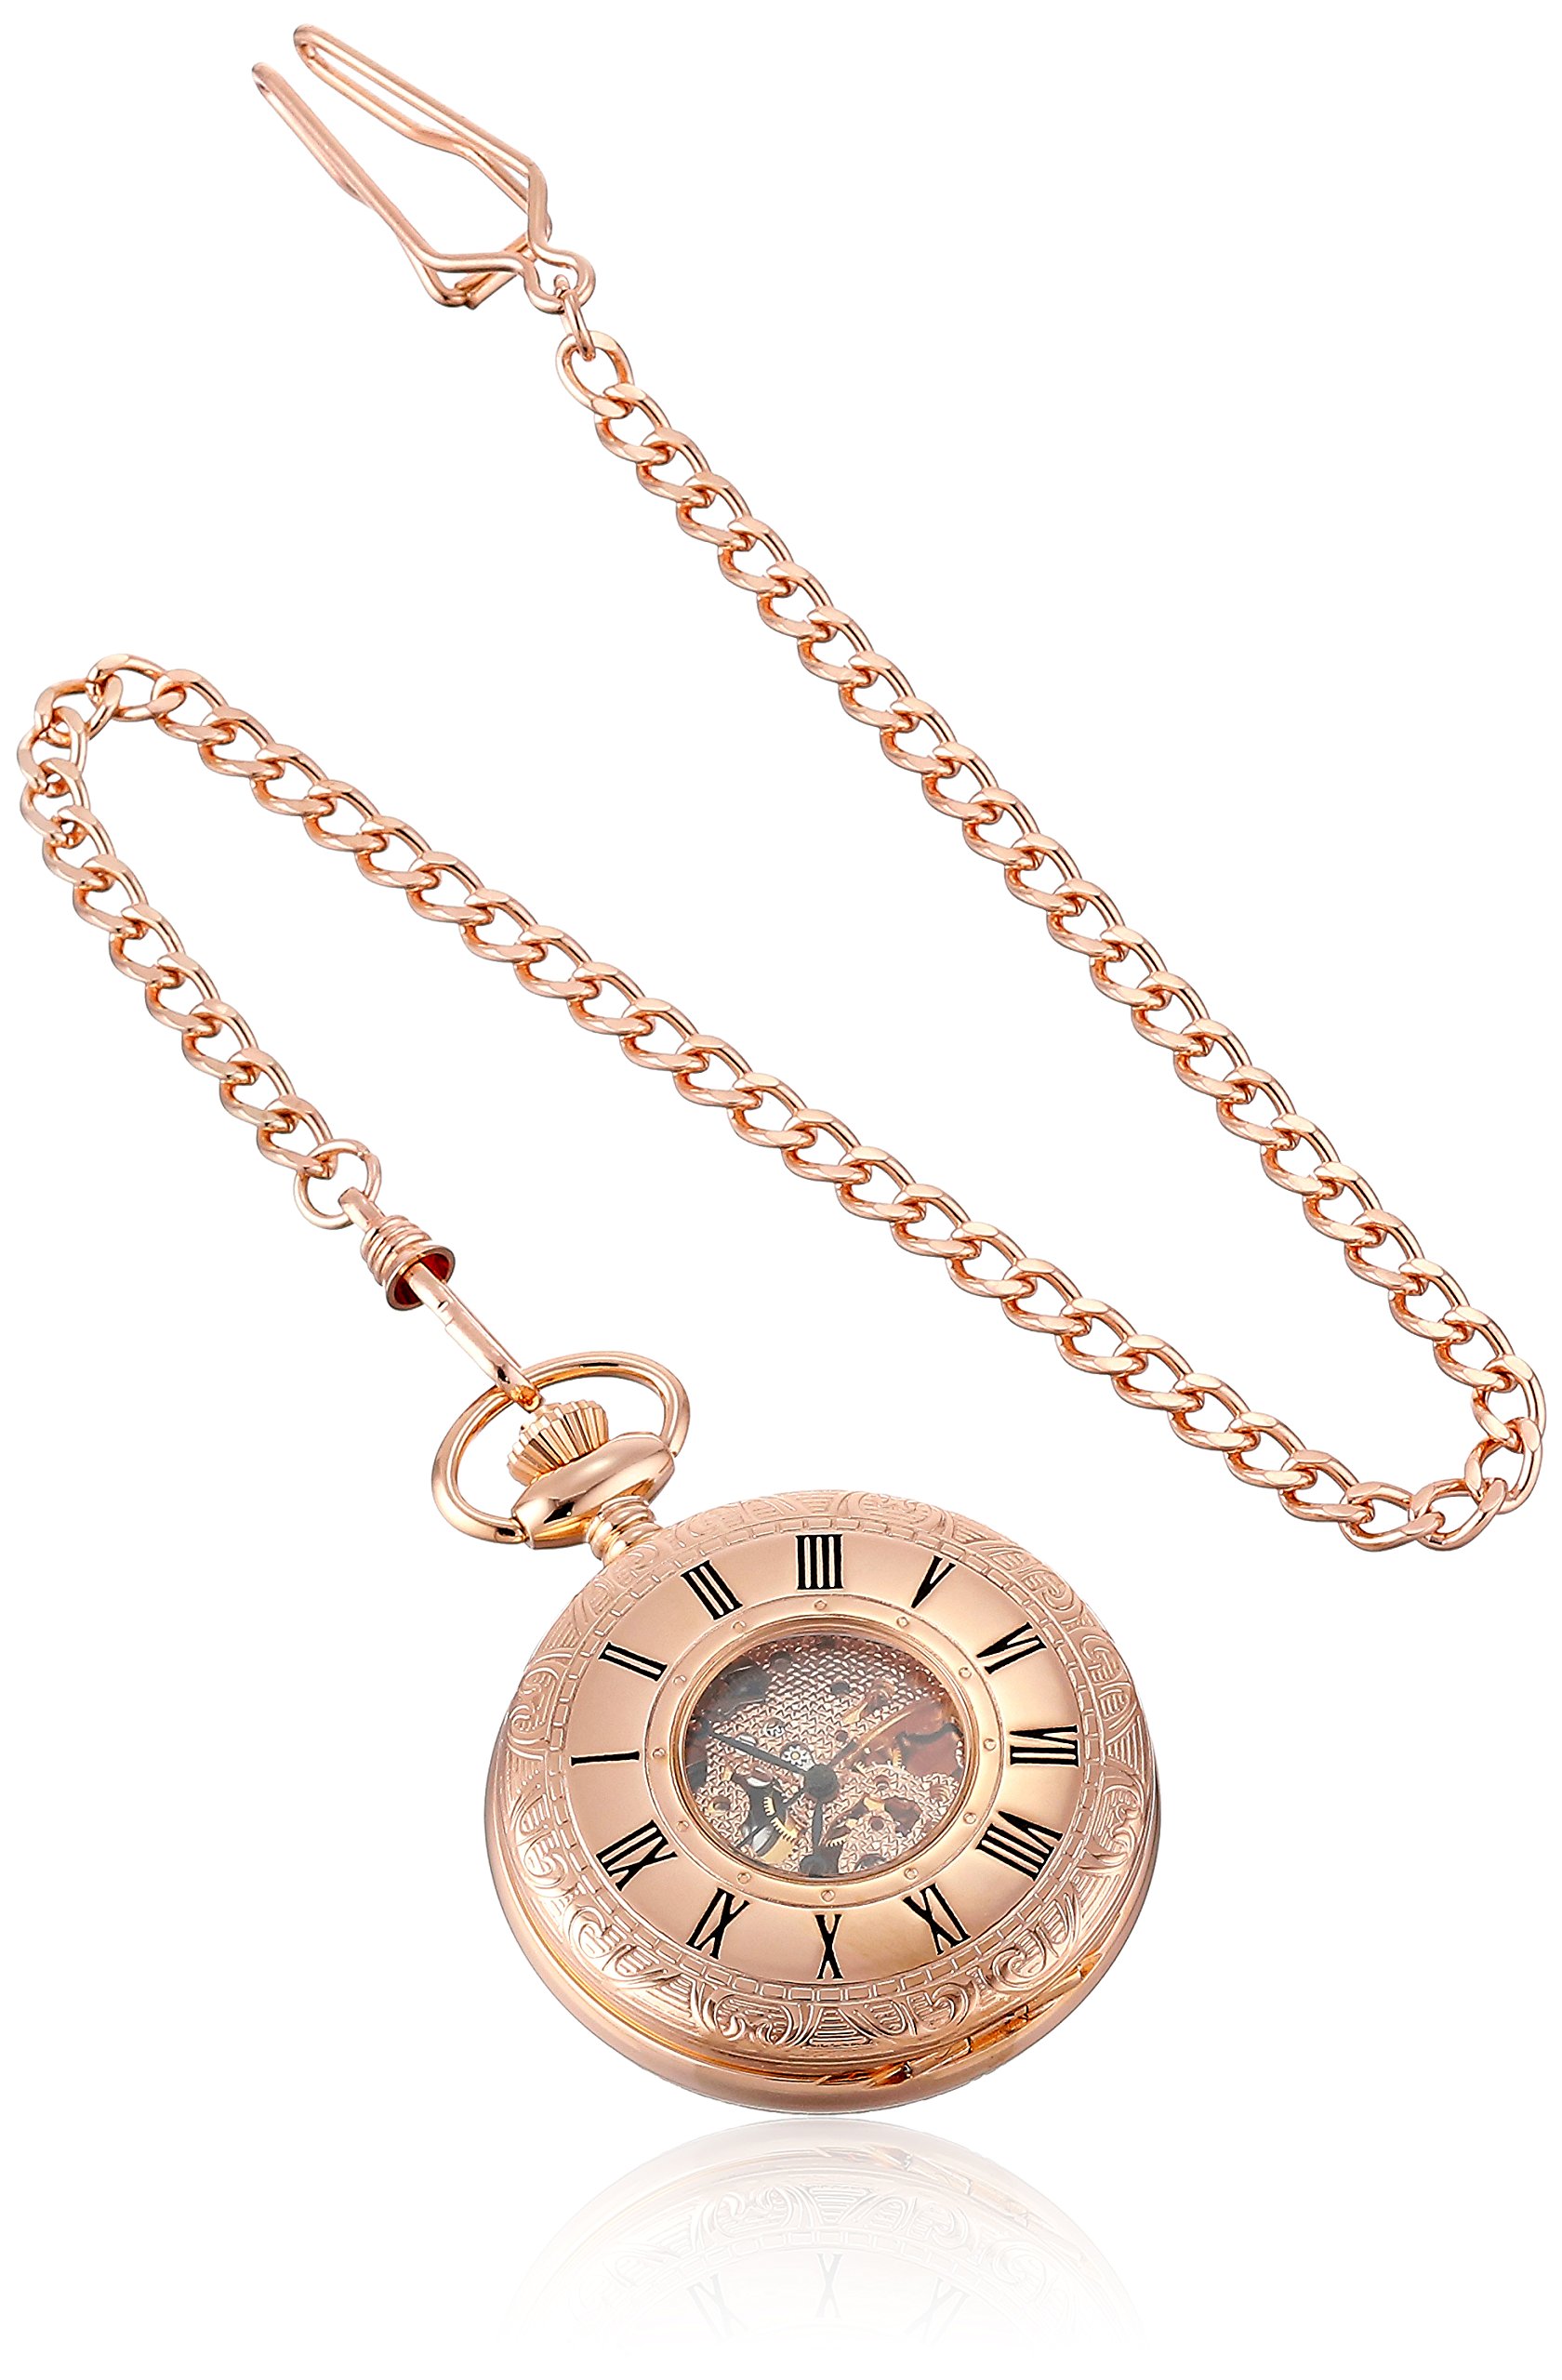 Charles-Hubert, Paris Rose Gold-Plated Mechanical Pocket Watch